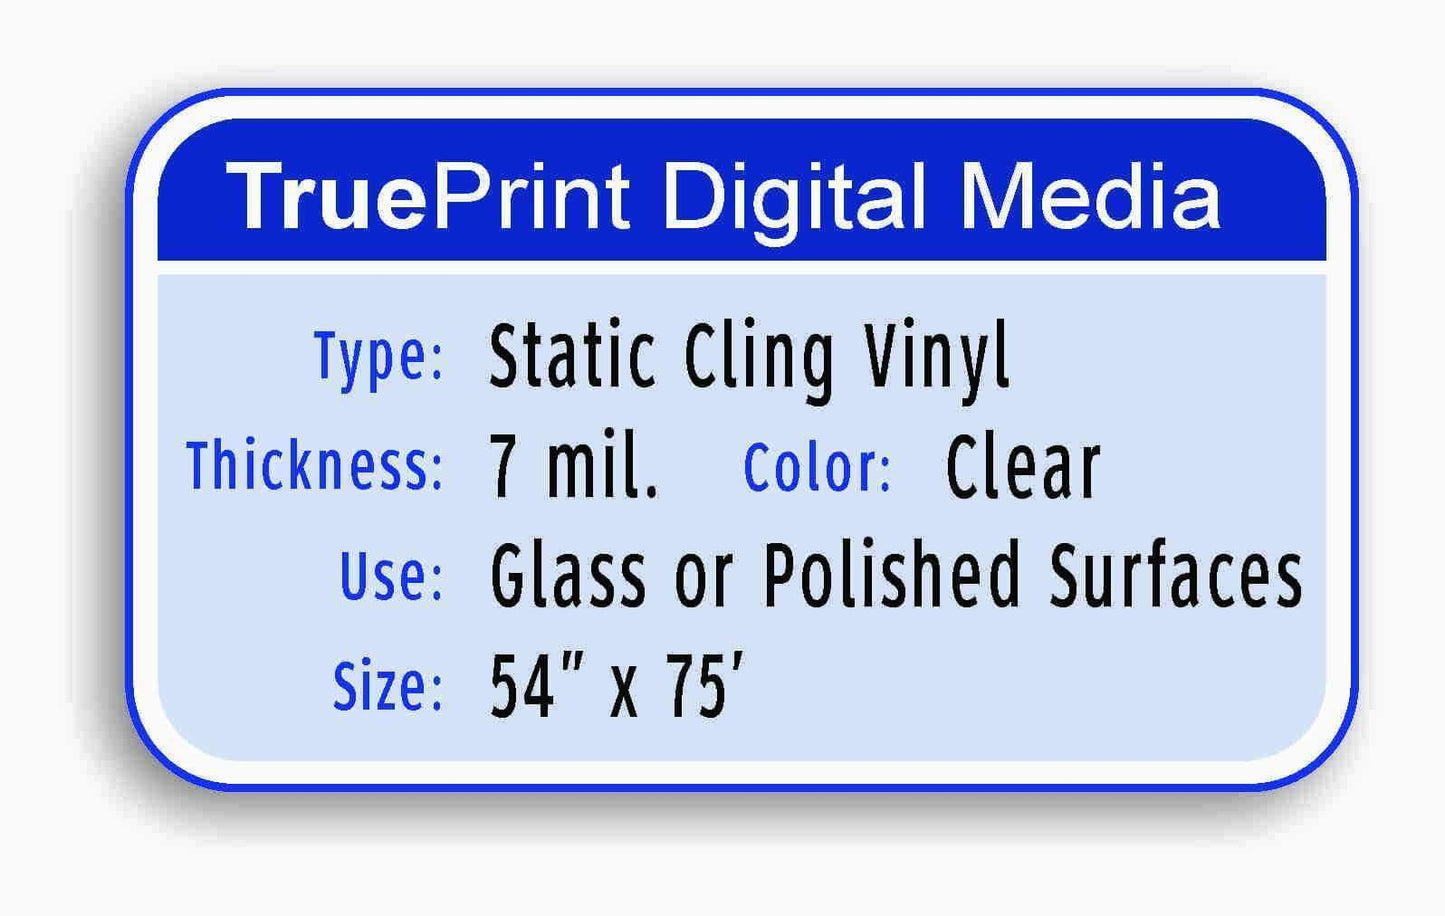 TruePrint 7mil Clear Static Cling Vinyl 54"